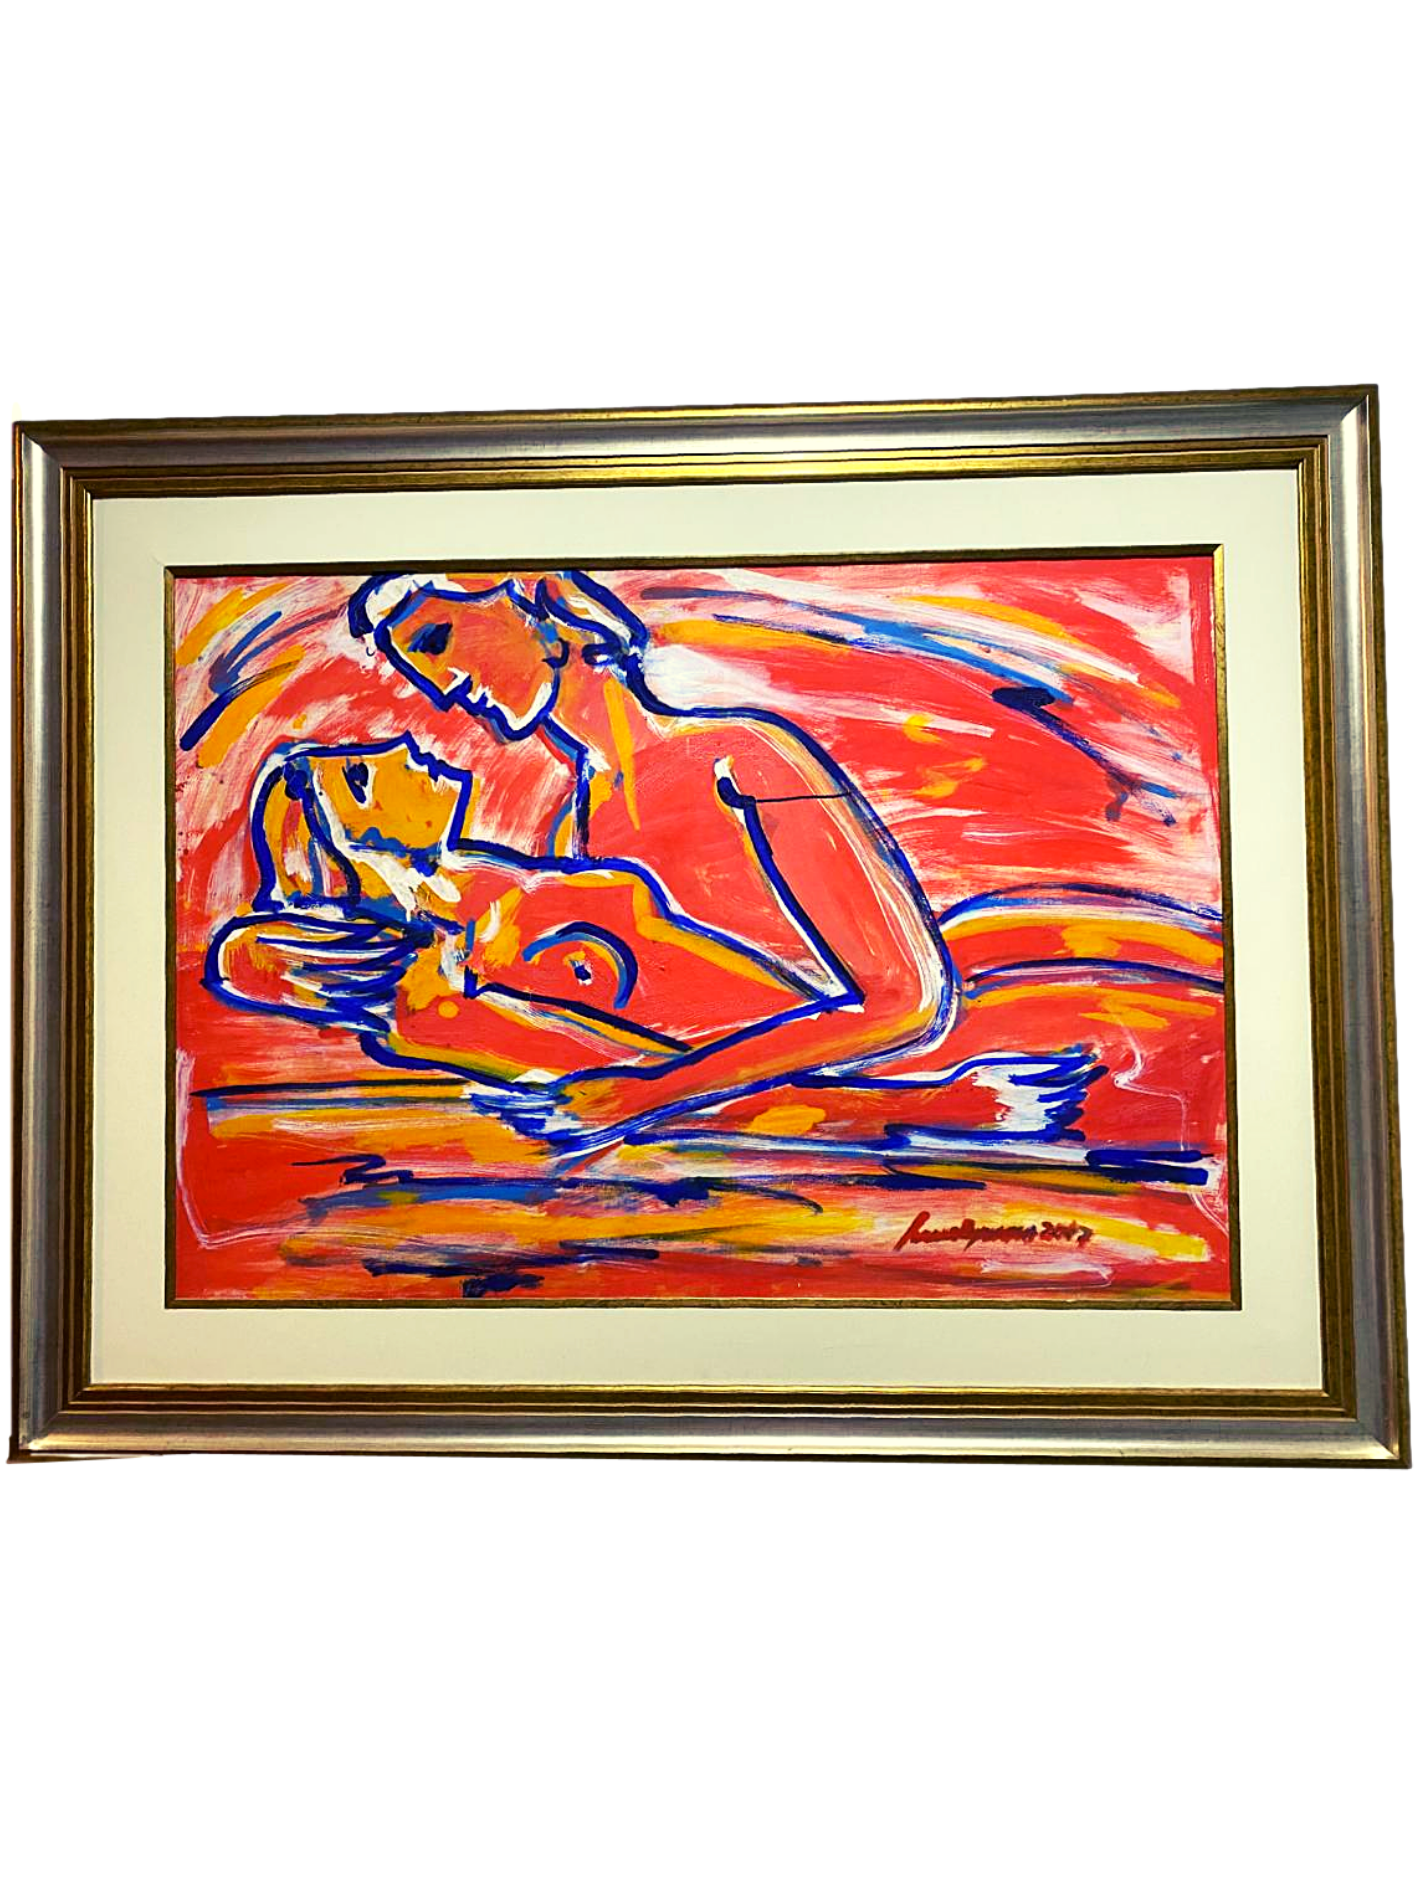 Cuadro de Lucio Aquino 97 x 68 cm